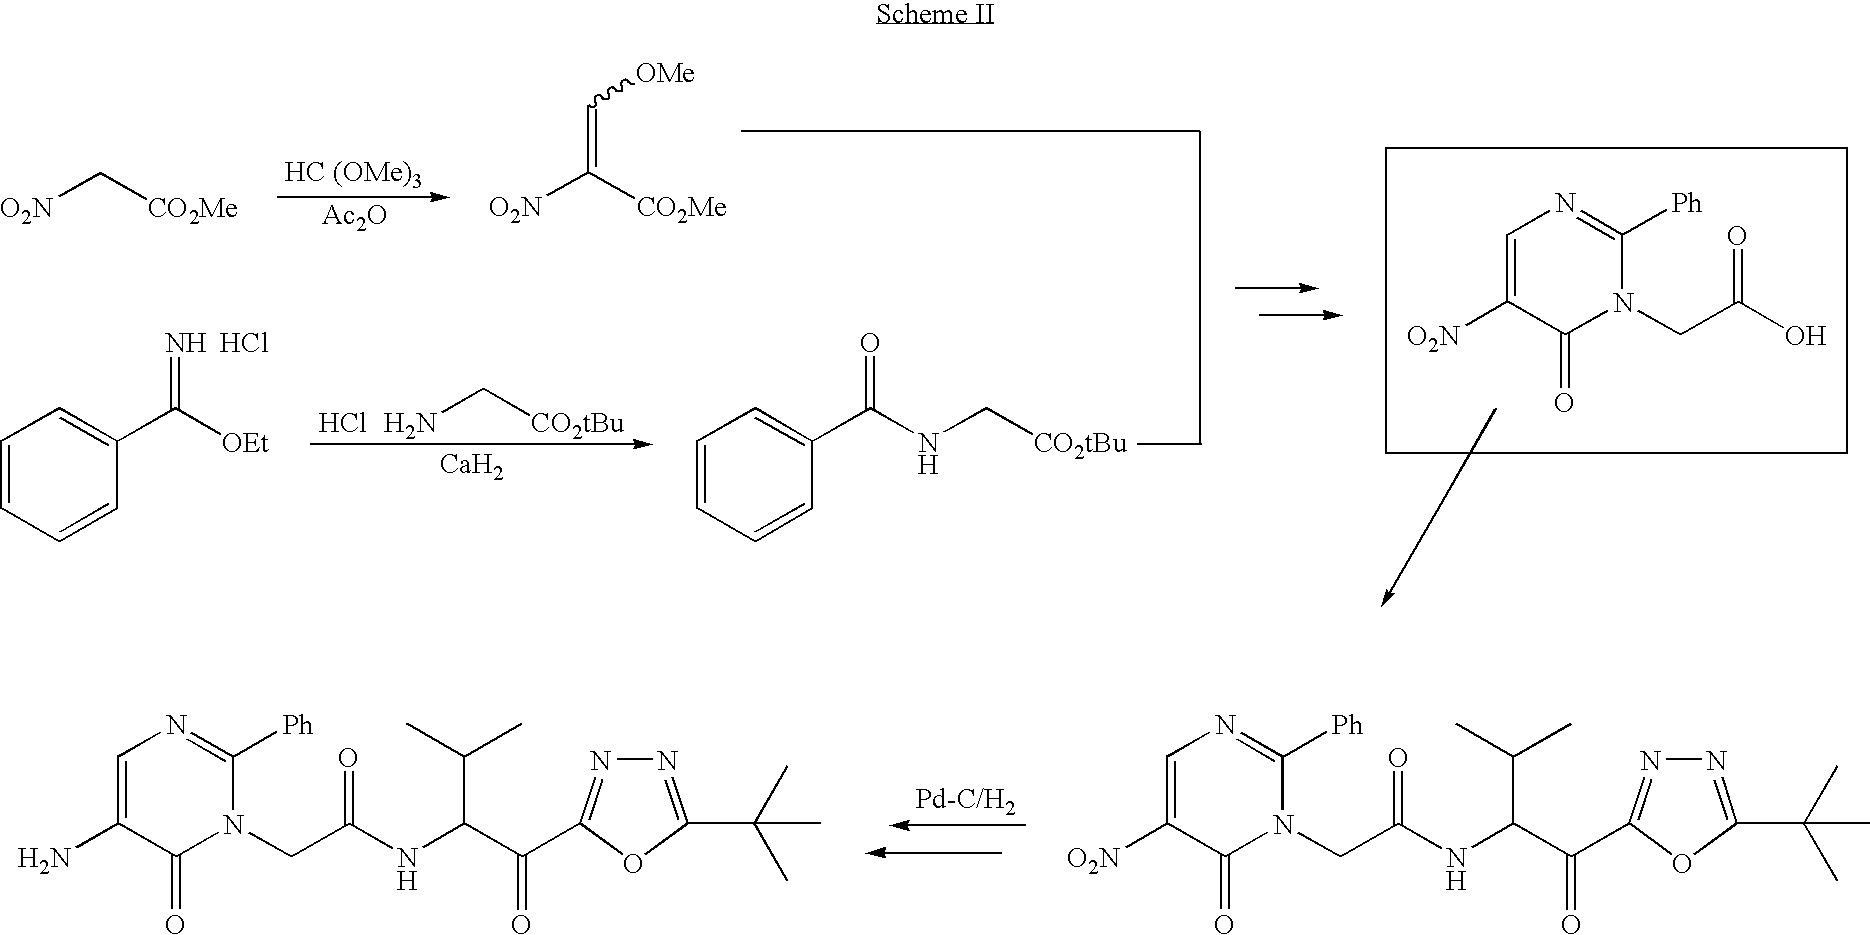 Process for preparing pyrimidine compound